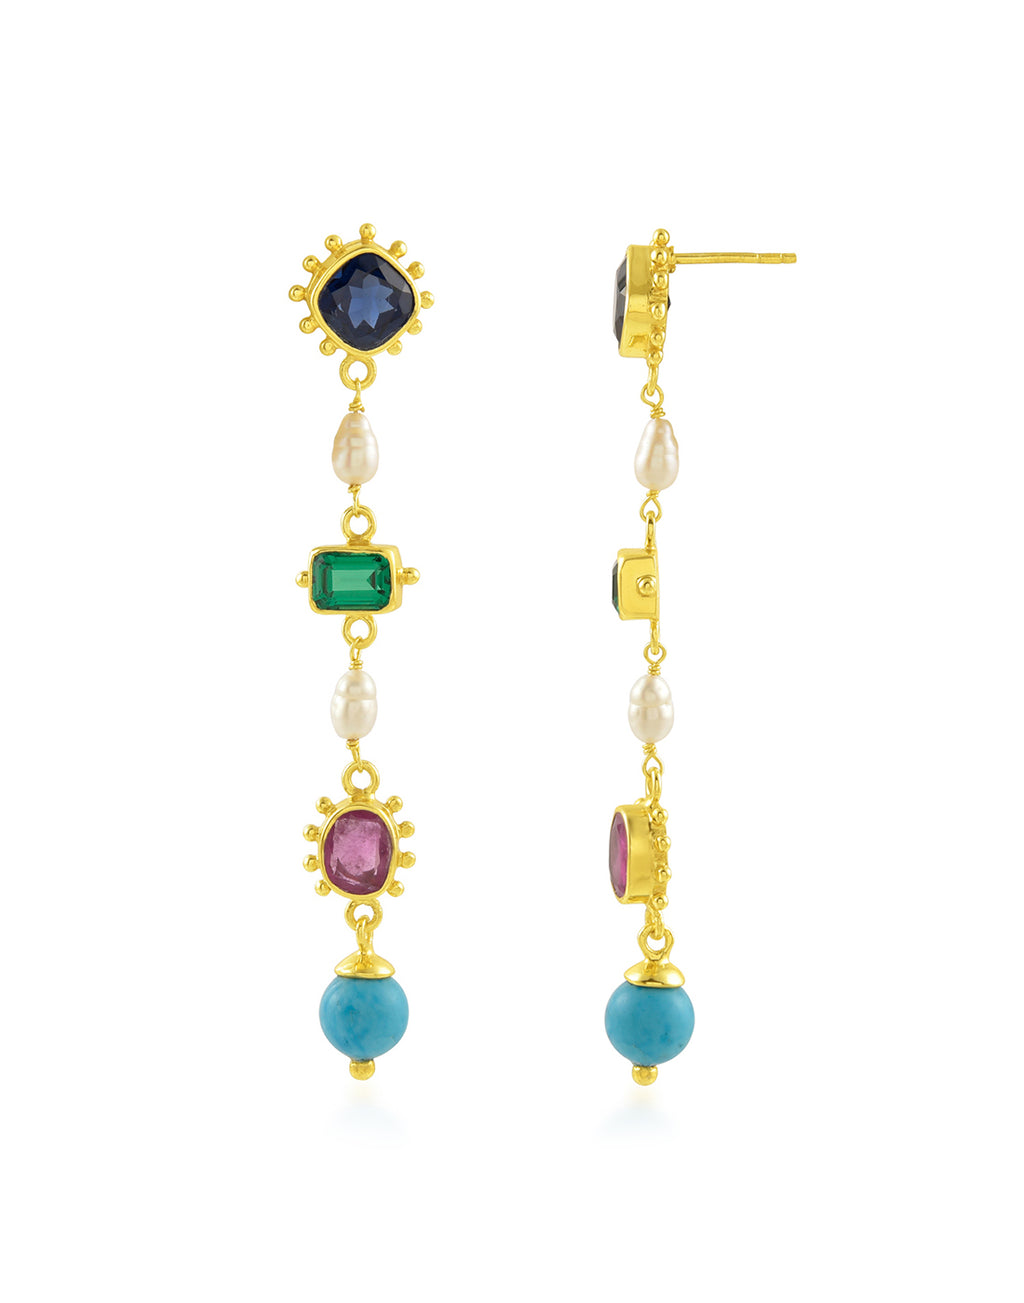 Multicolour Gemstone Danglers - Statement Earrings - Gold-Plated & Hypoallergenic Jewellery - Made in India - Dubai Jewellery - Dori